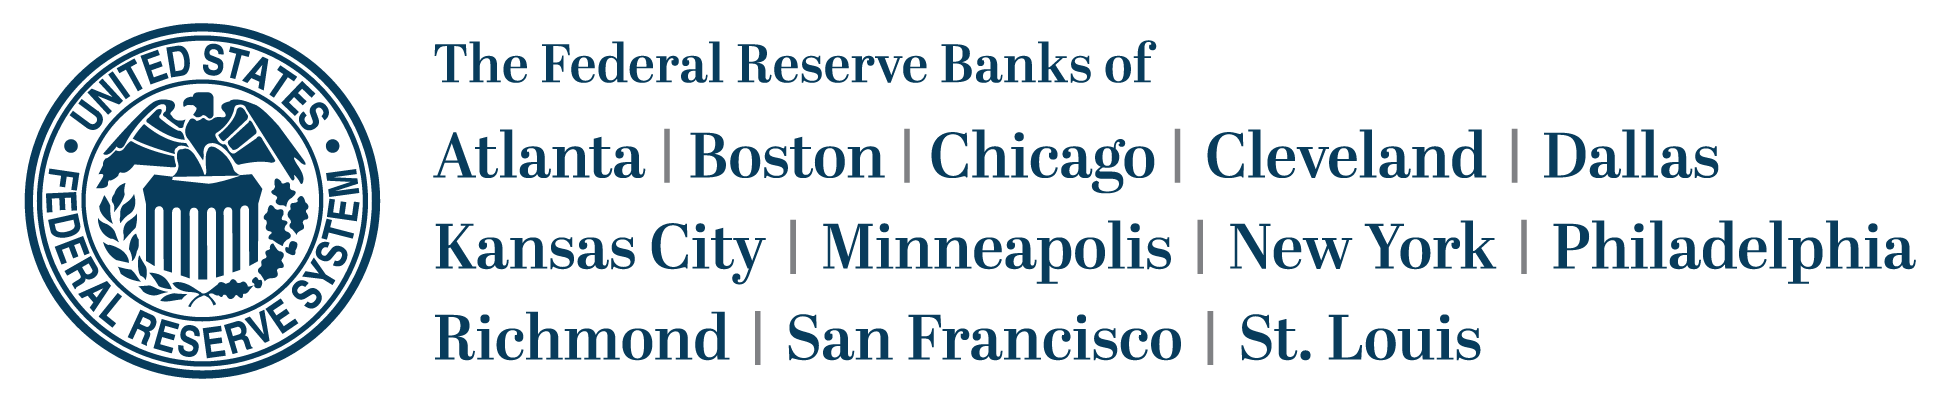 FRB 12 banks logo